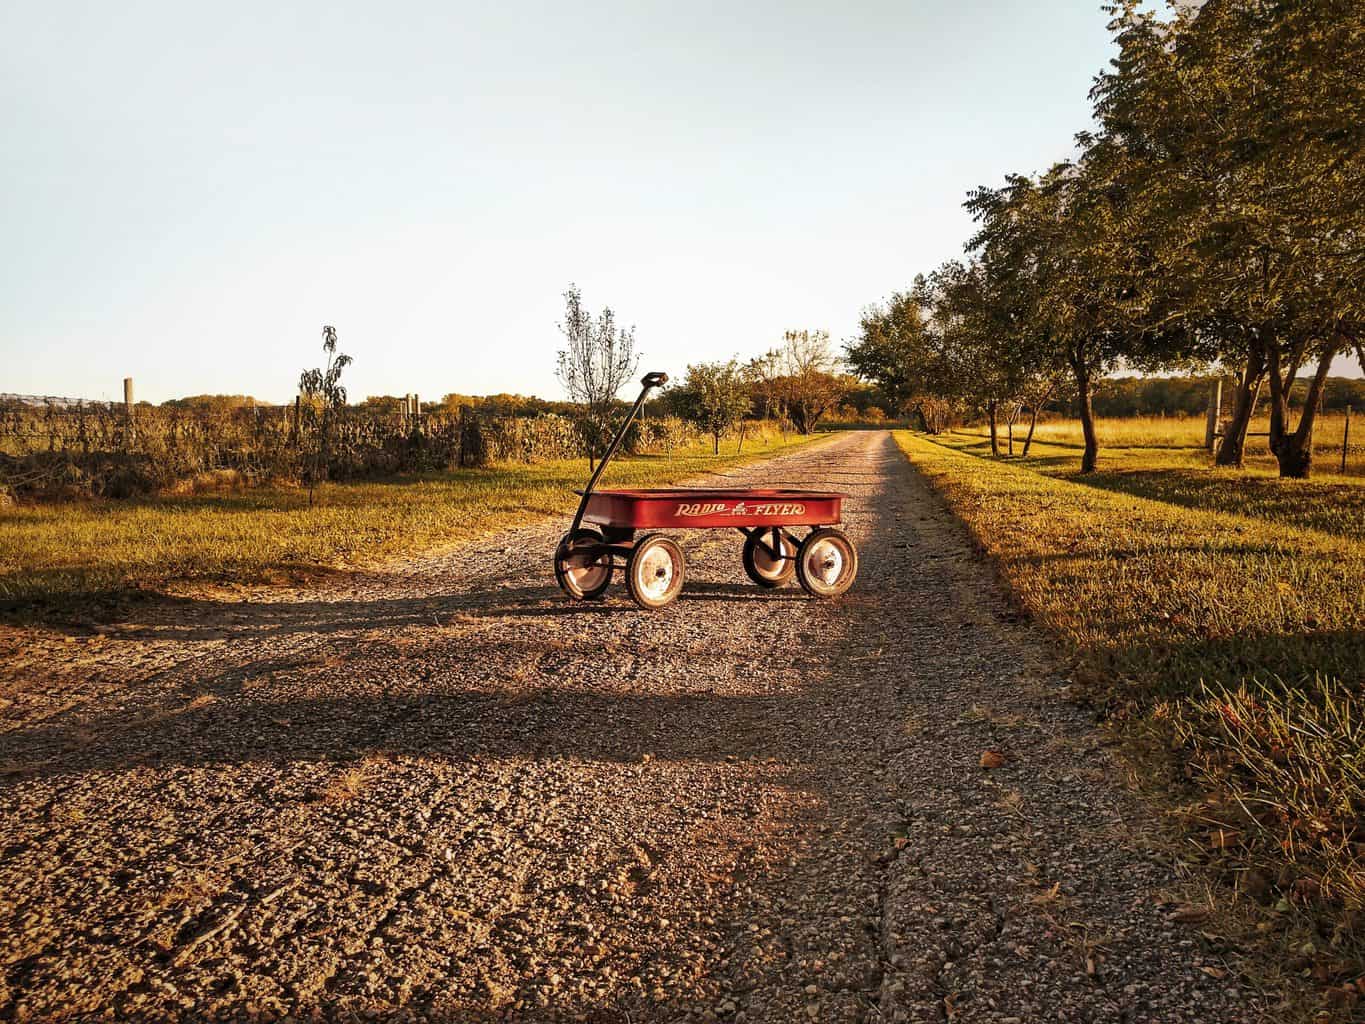 kansas landscape with wheelbarrow